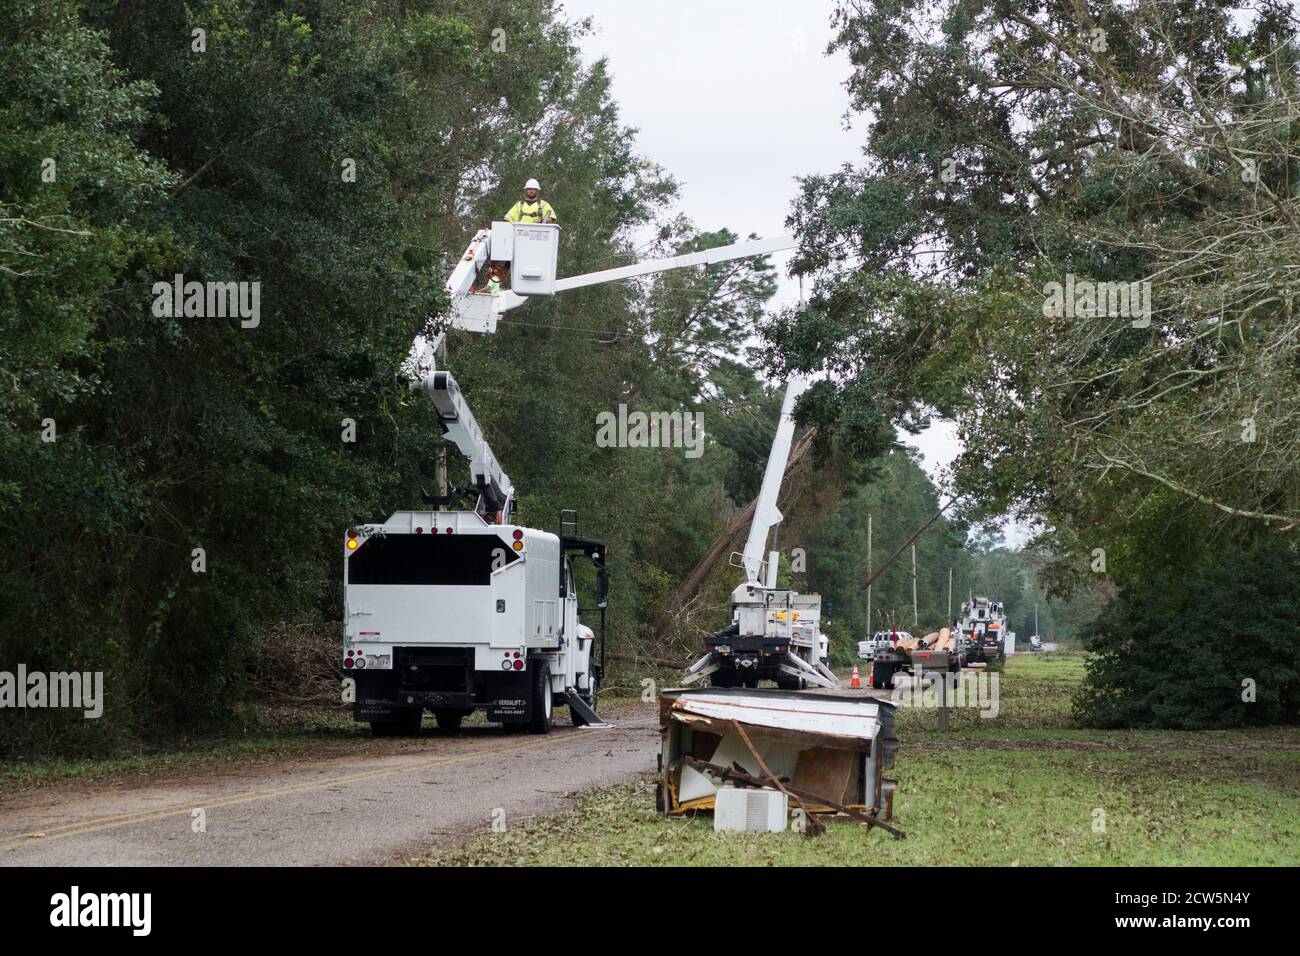 Illinois linemen restore power to Alabama residents following Hurricane Sally. Stock Photo